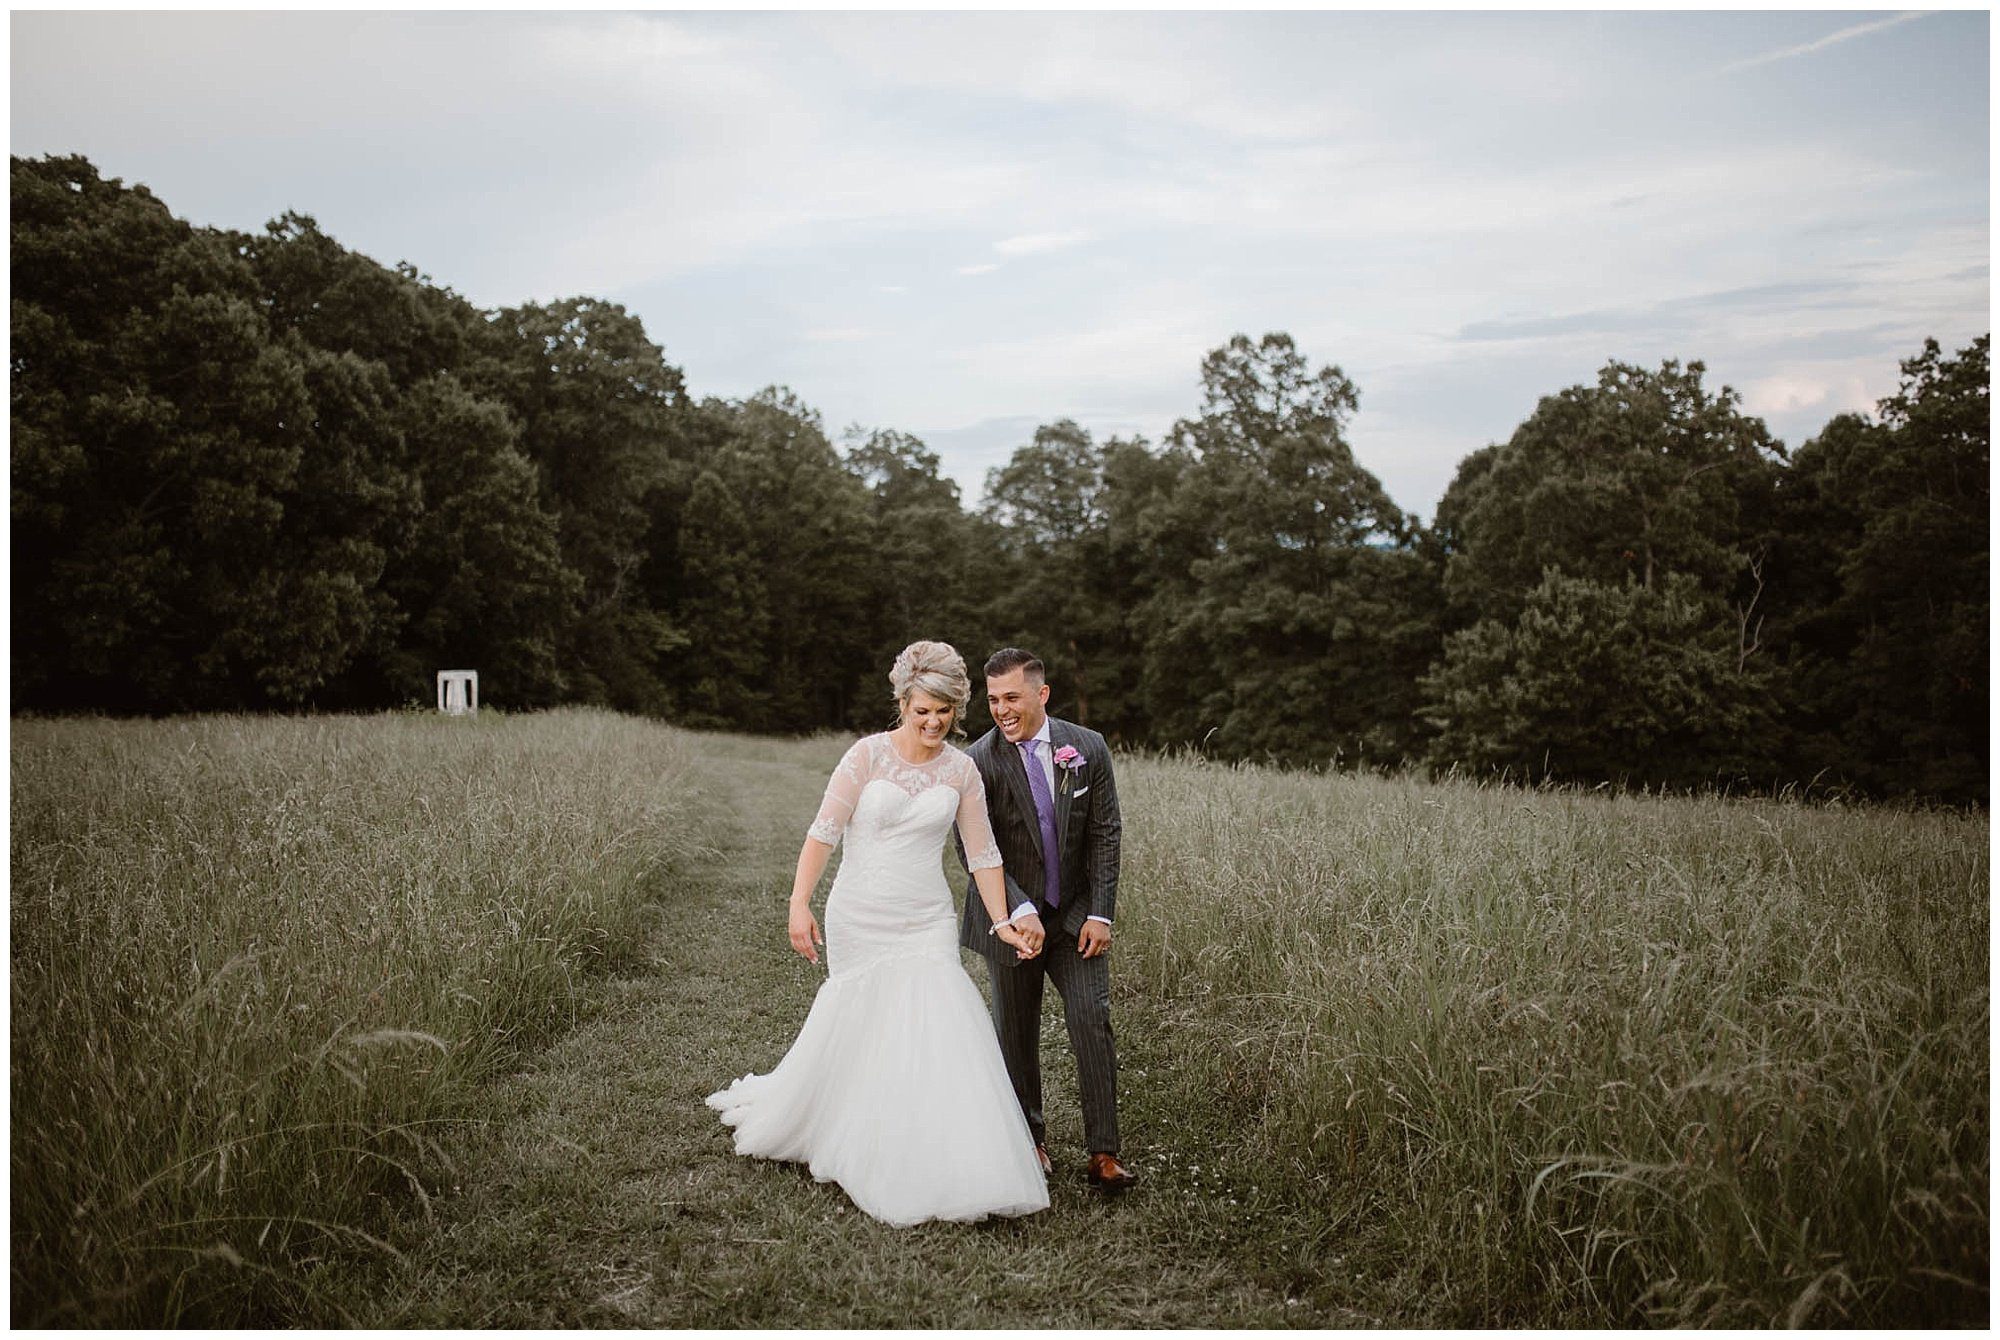 Emotional wedding photos of bride and groom at Heartland Meadows